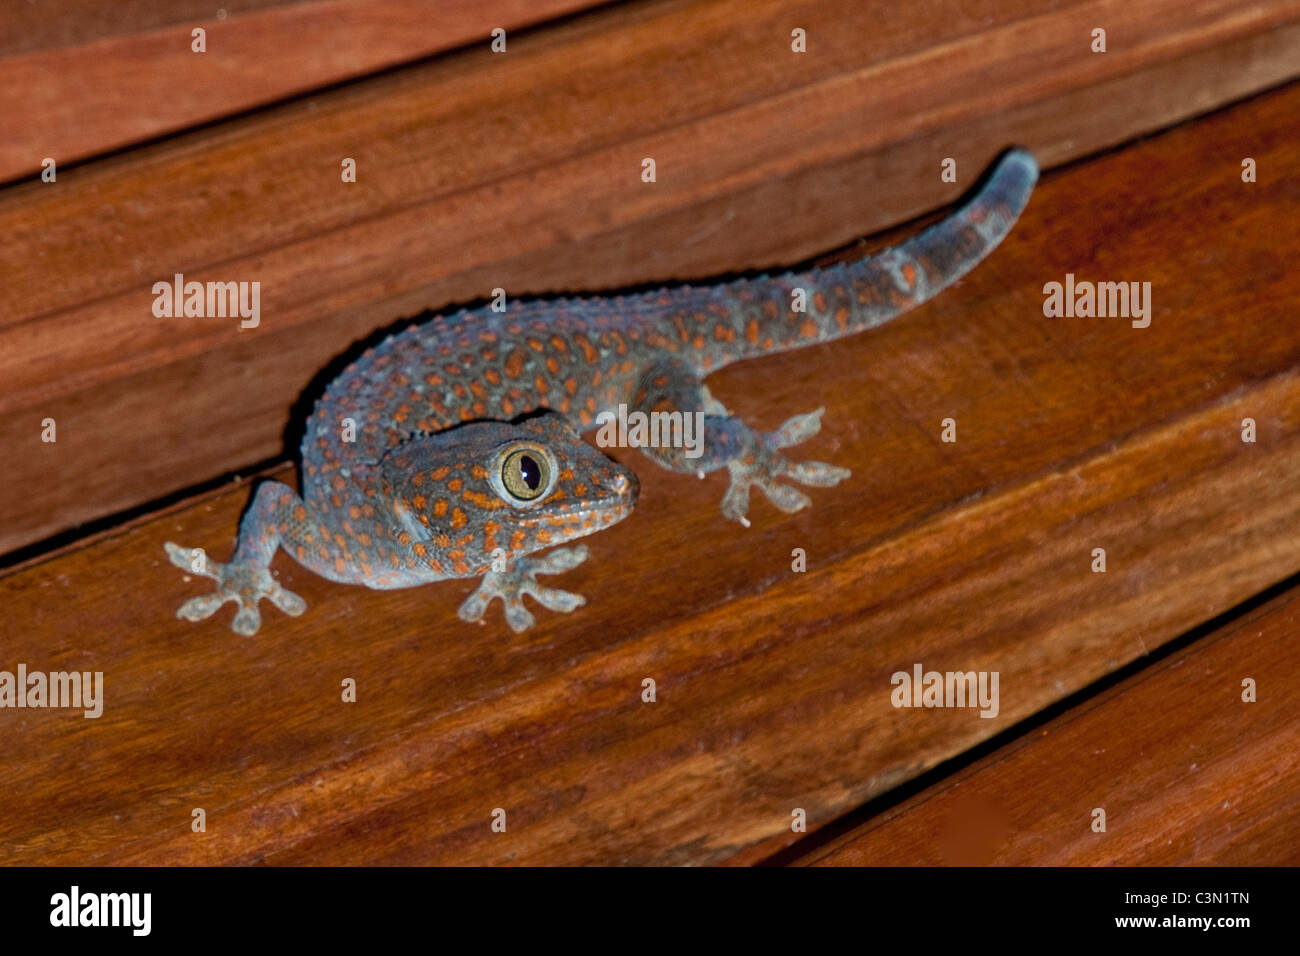 Indonesien, Bali Insel, Tejakula, Tokay Gecko (Gekko Gecko). Männlich Stockfoto